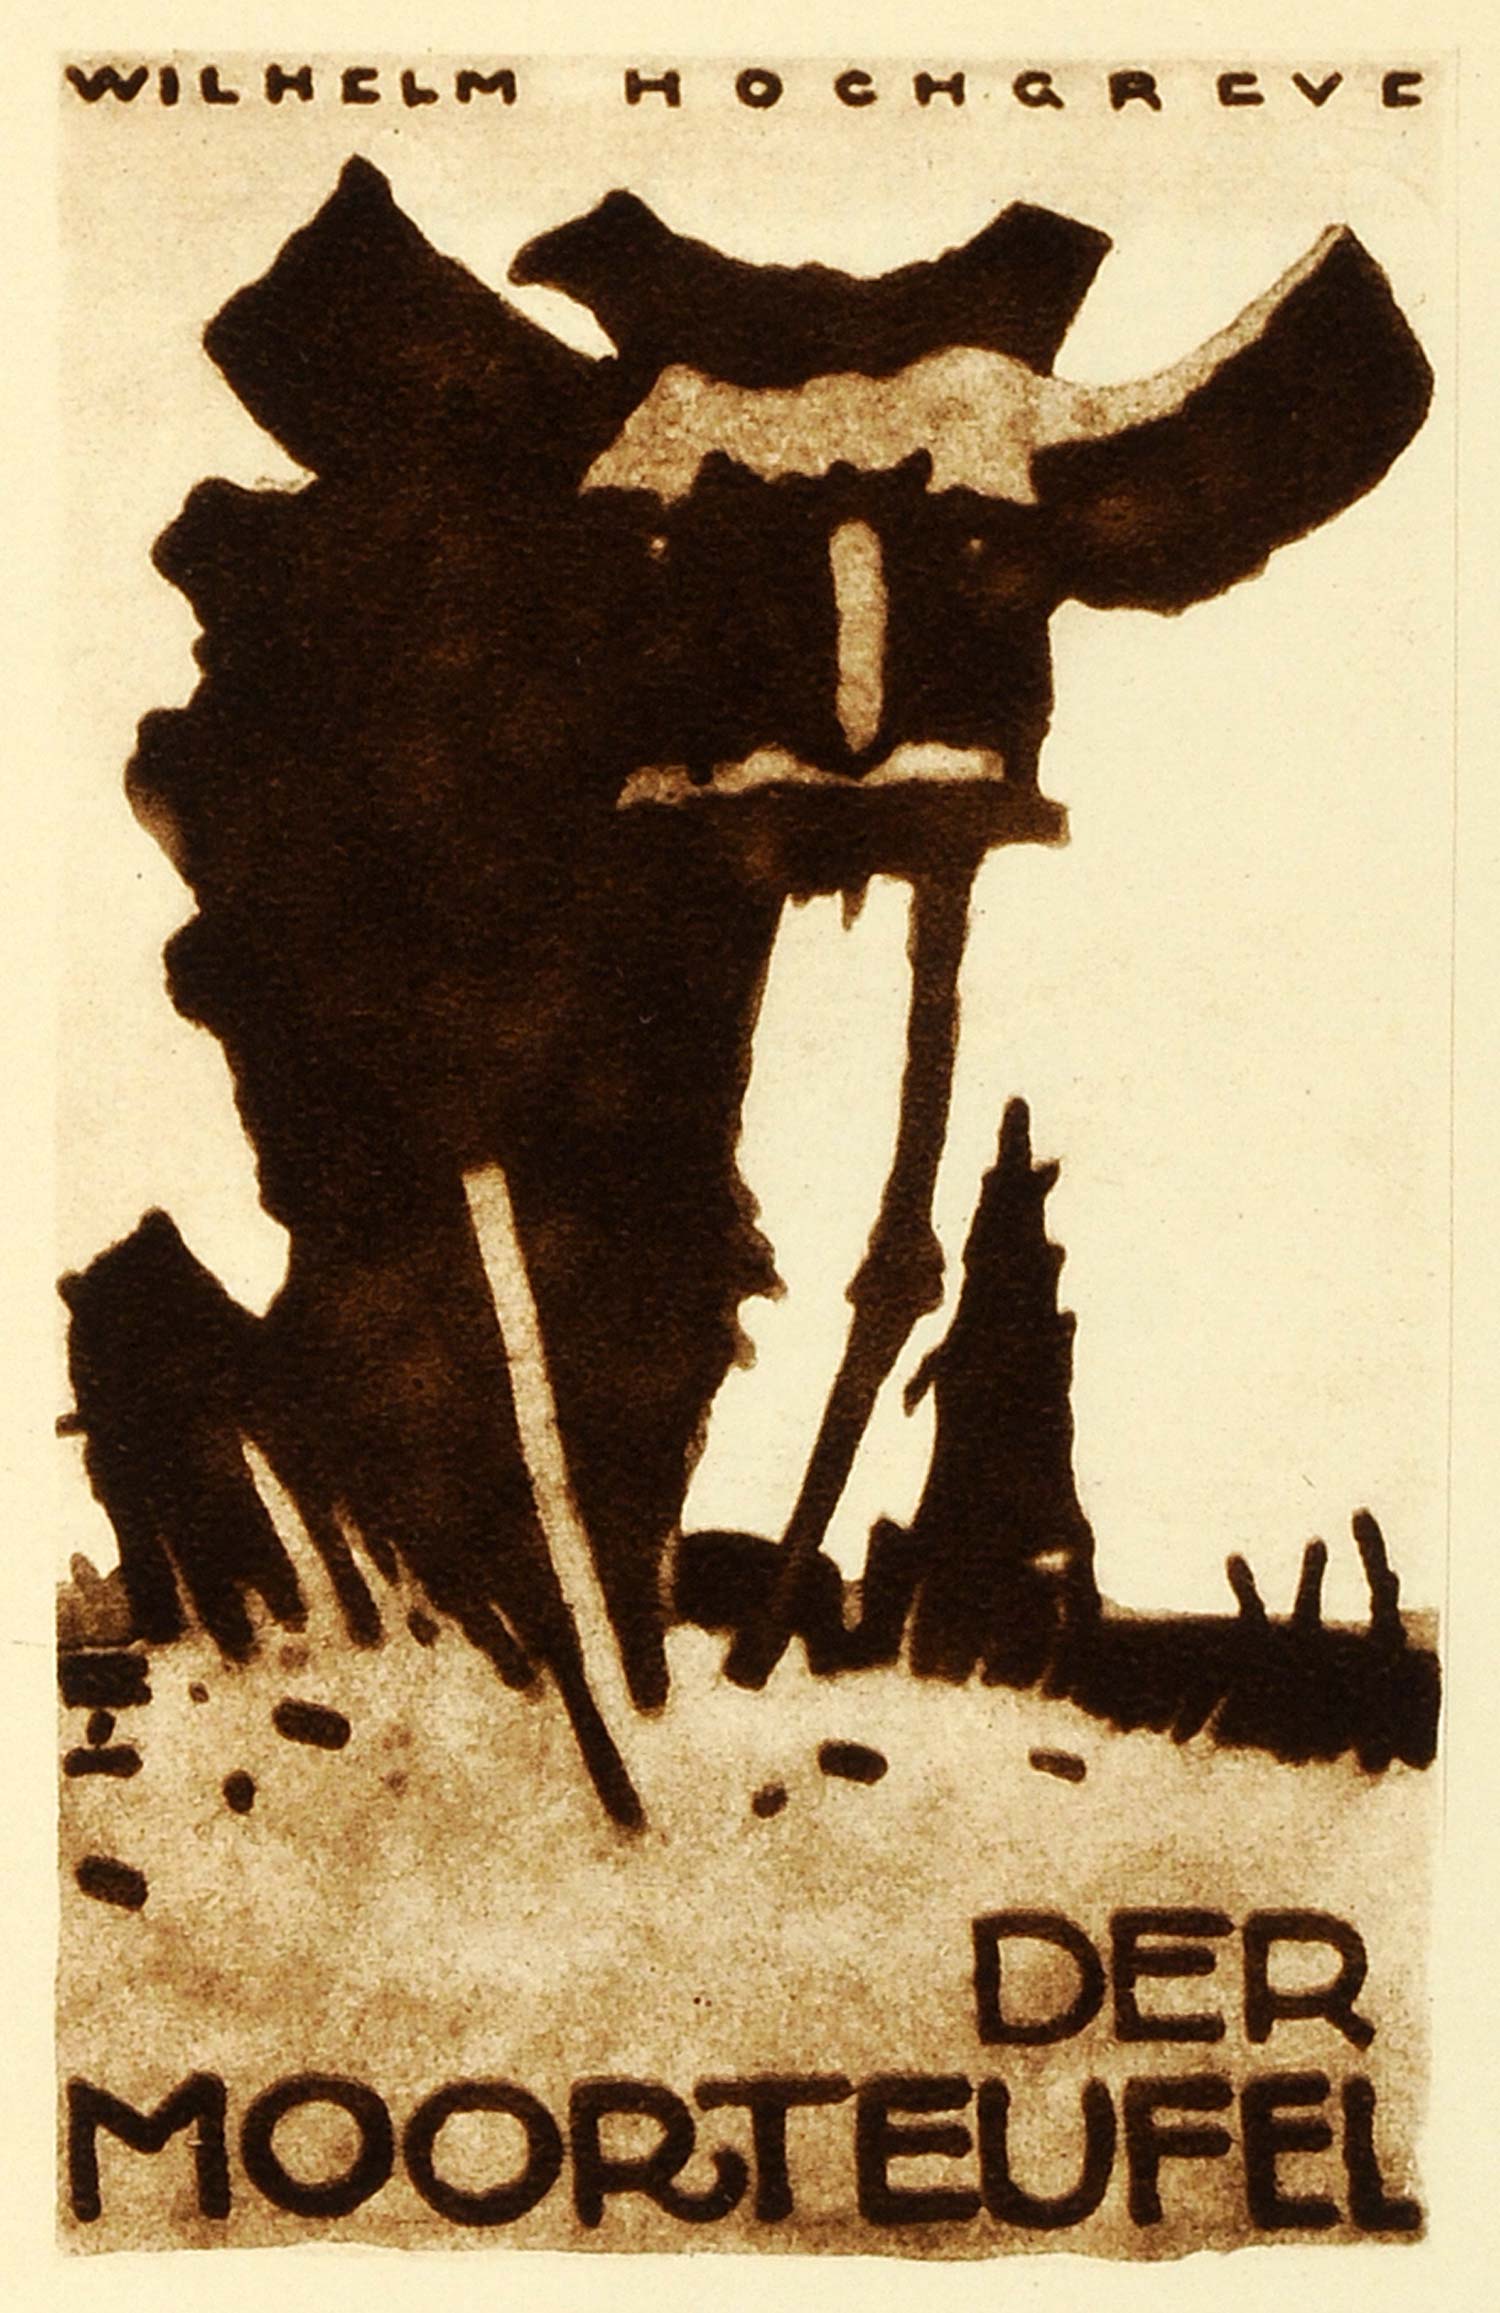 1926 Photogravure Ludwig Hohlwein Moorteufel Wilhelm Hochgreve Book Cover Art